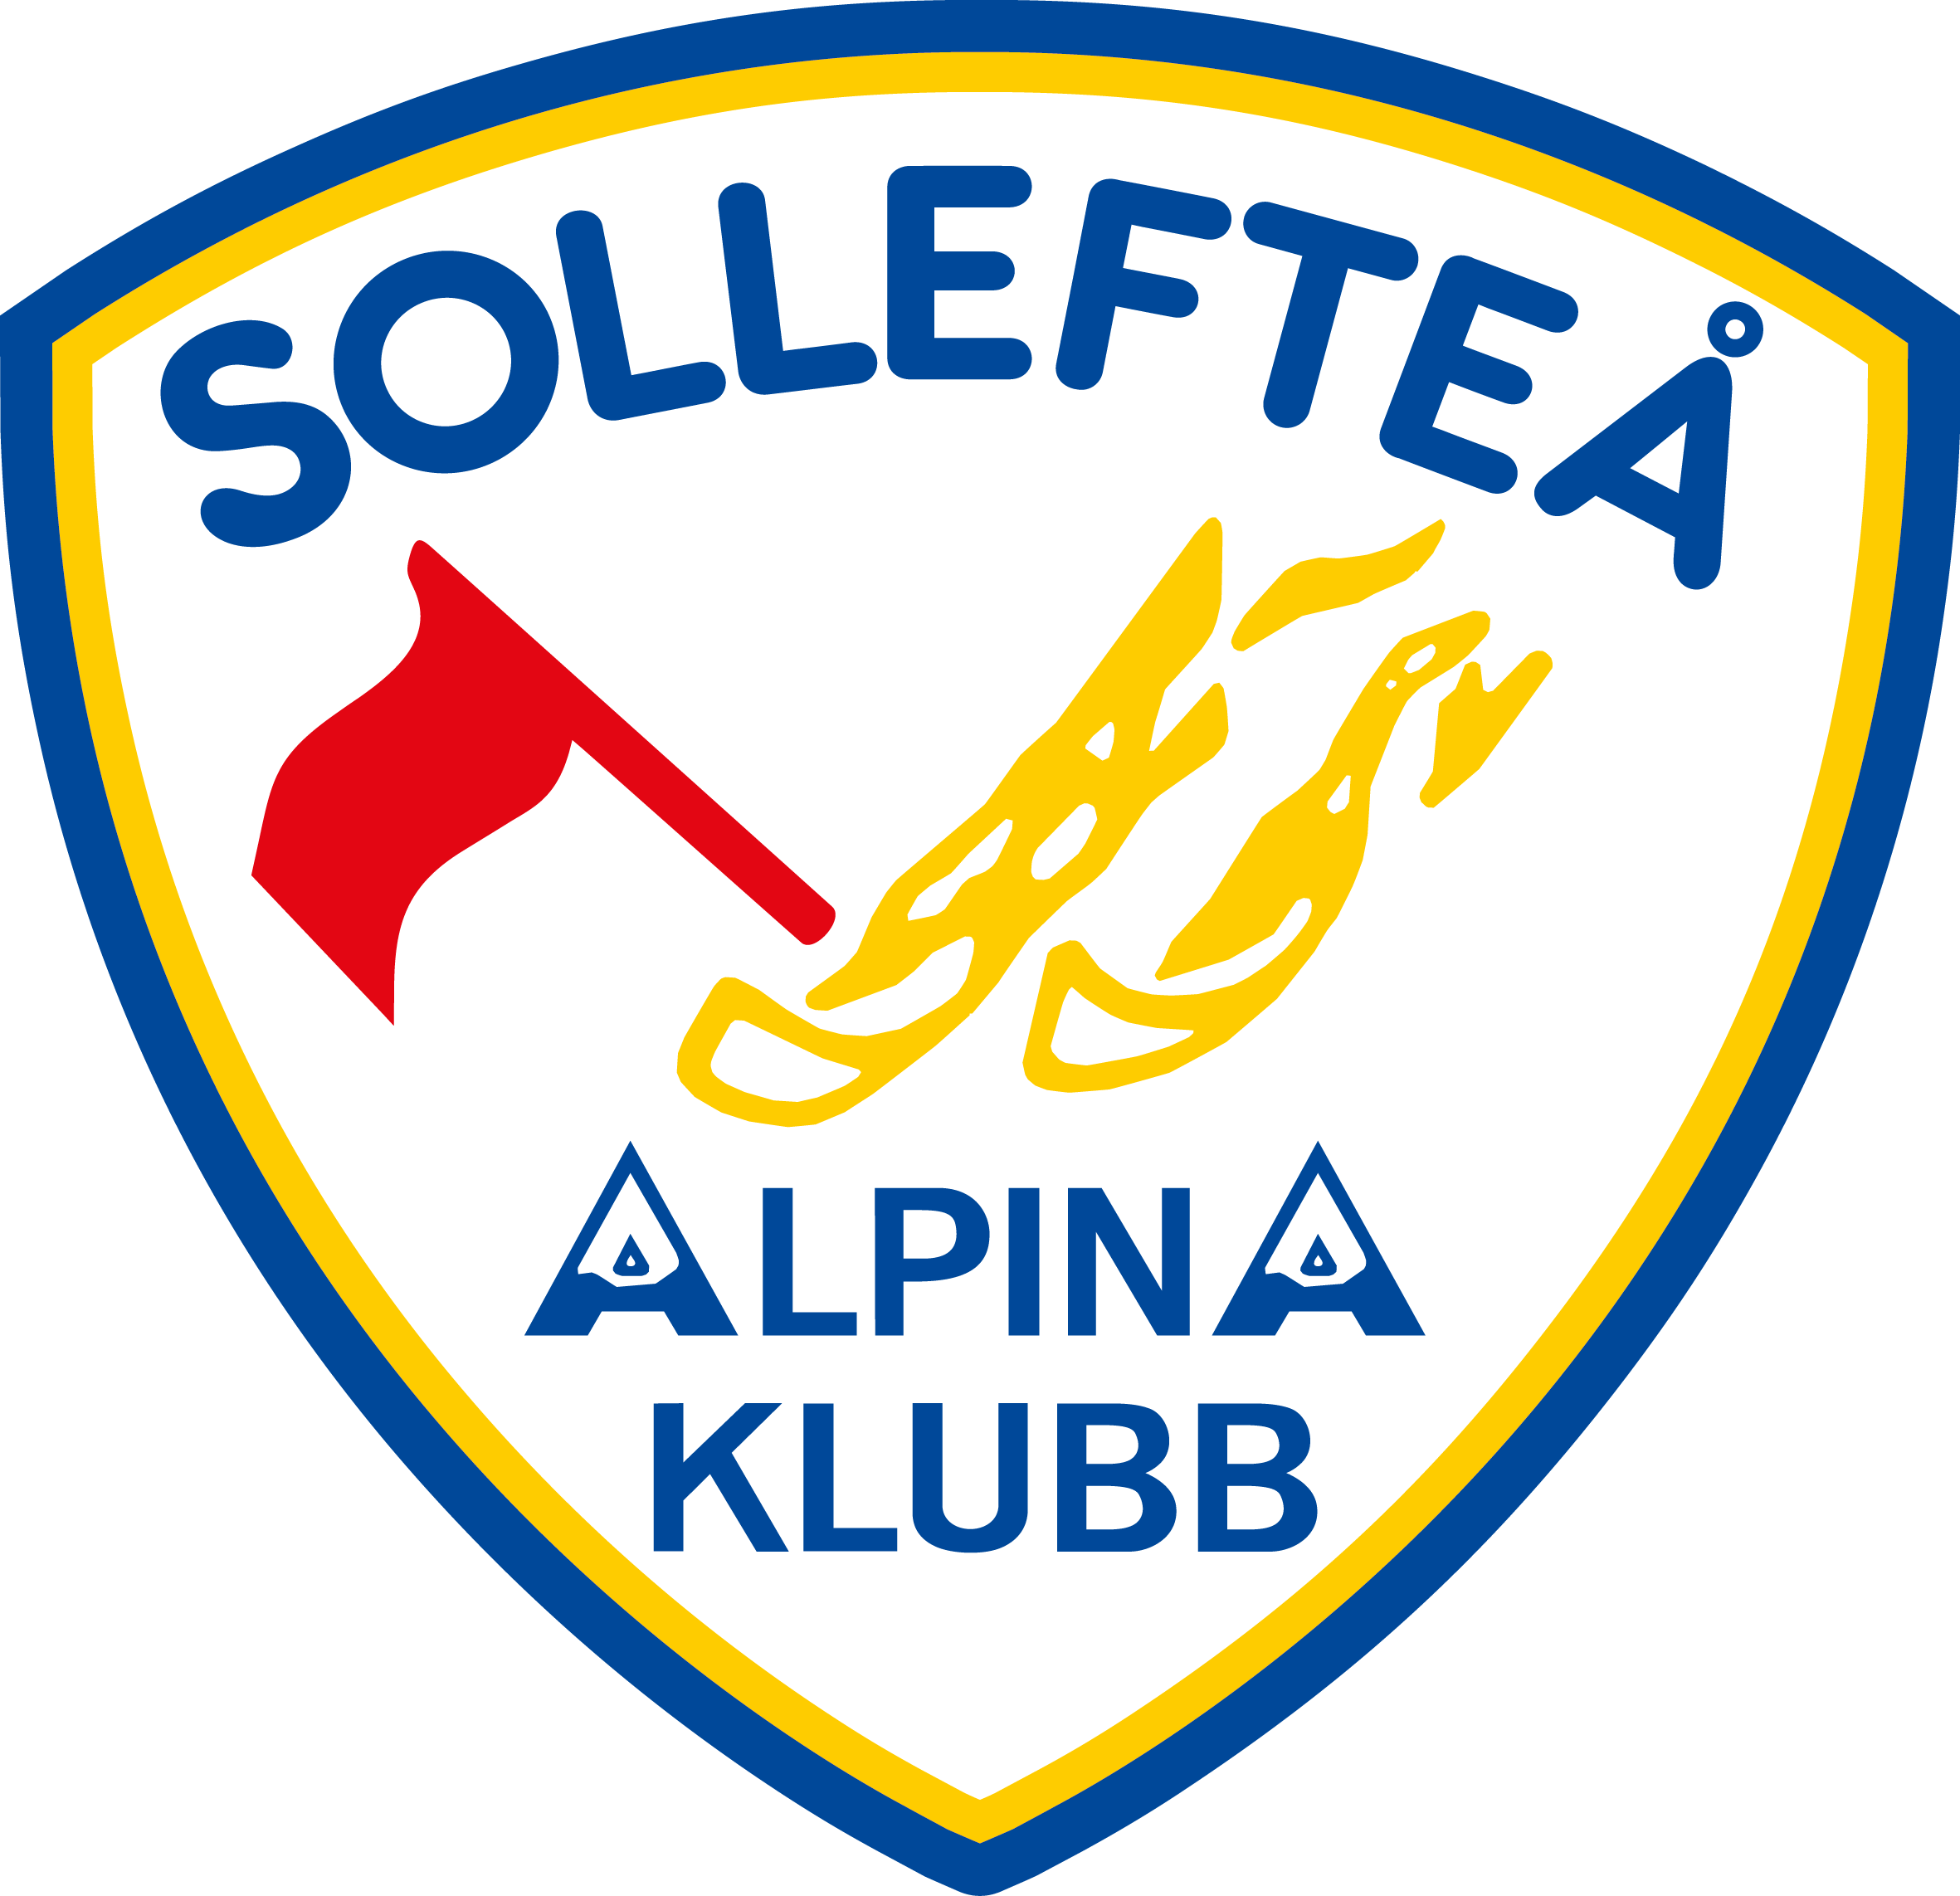 Sollefteå Alpina Klubb